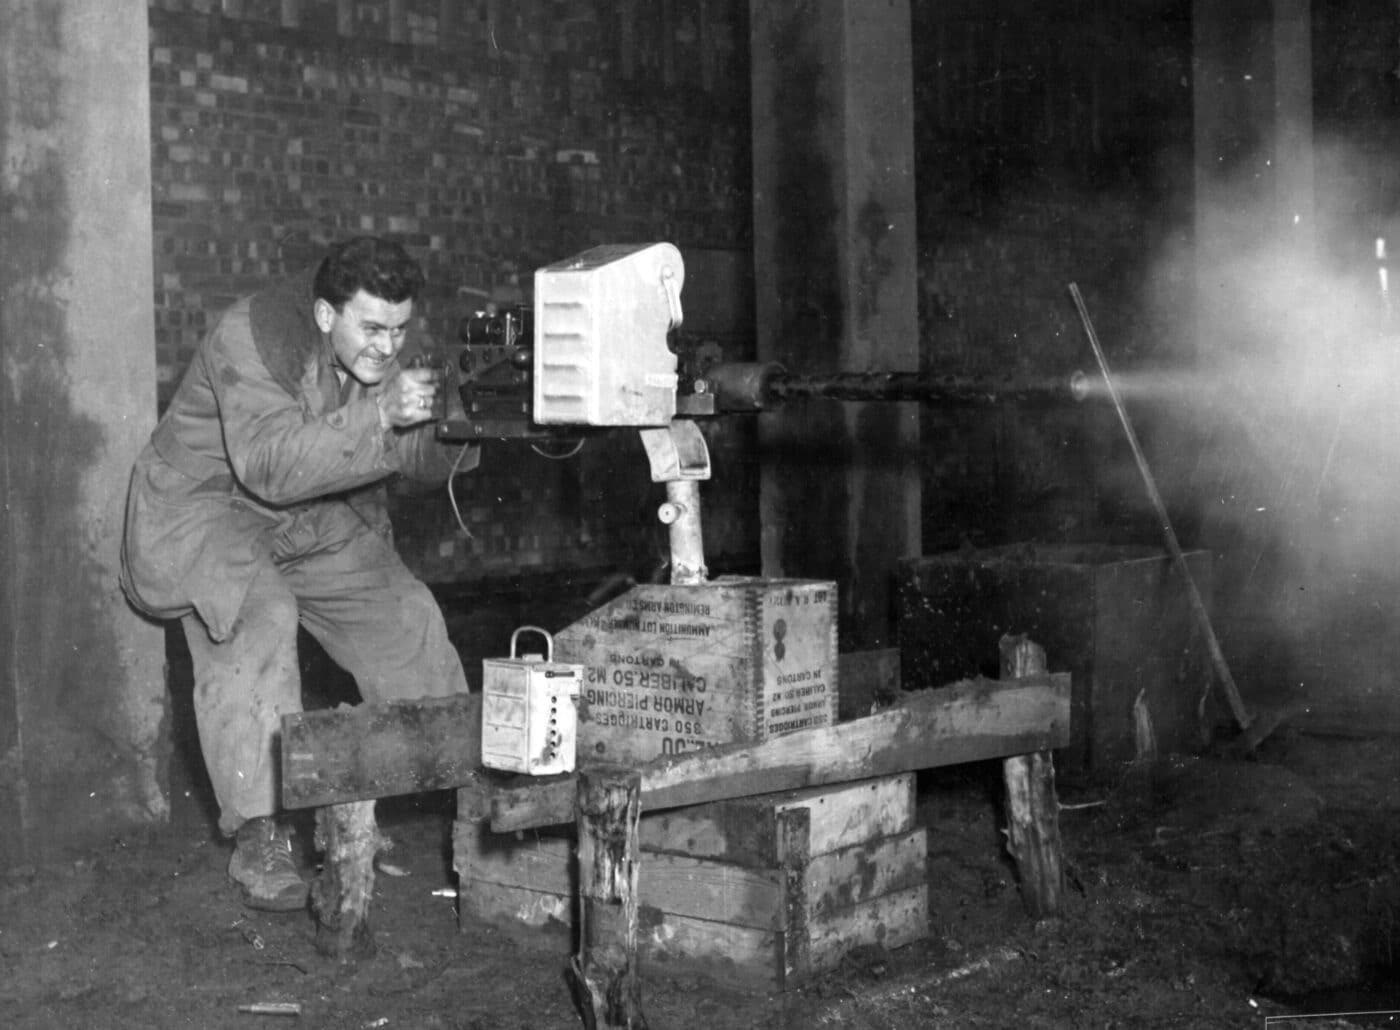 50 cal gunnery training in England in 1944